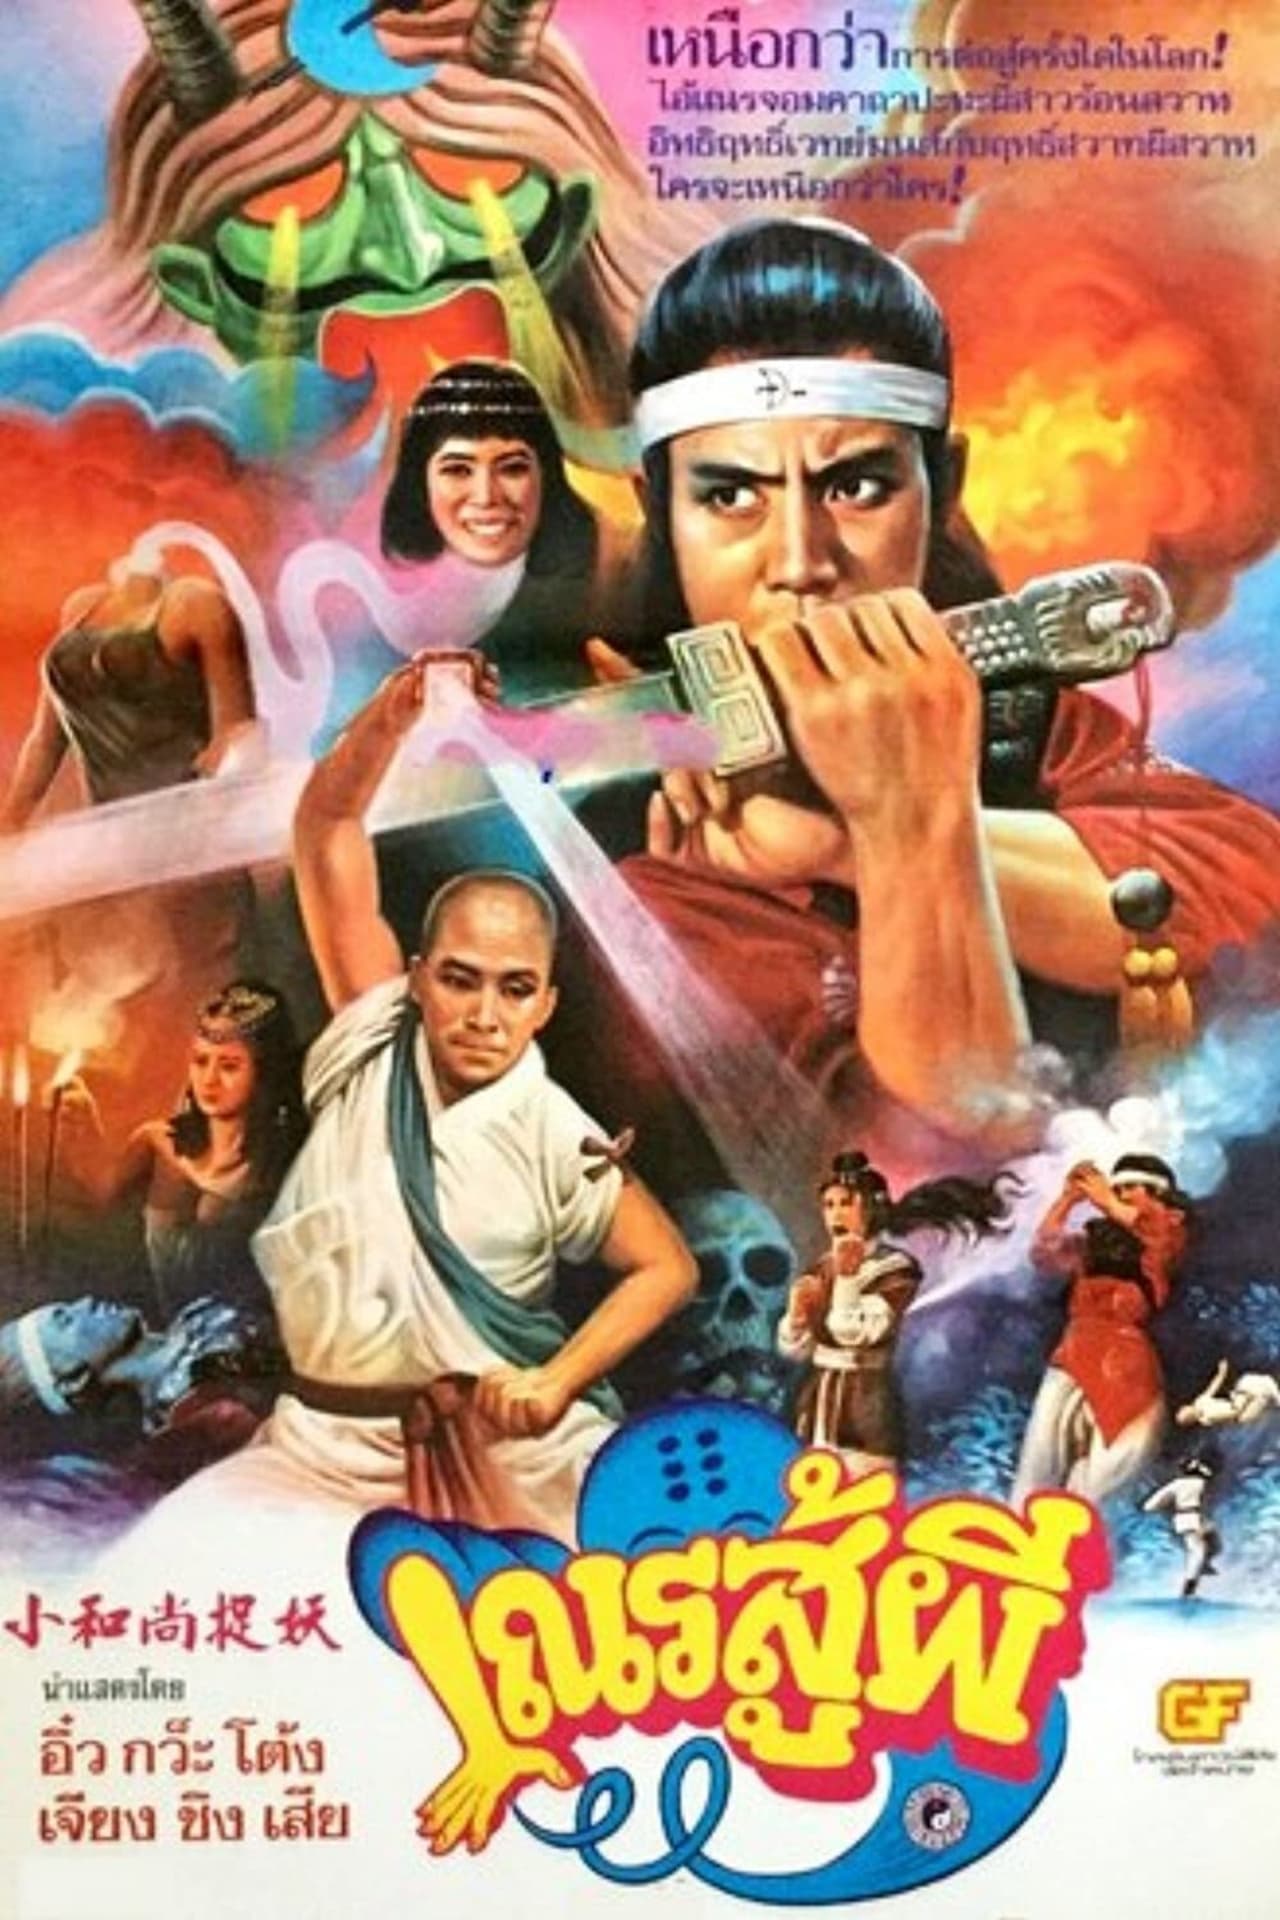 Shaolin vs Black Magic (1983)